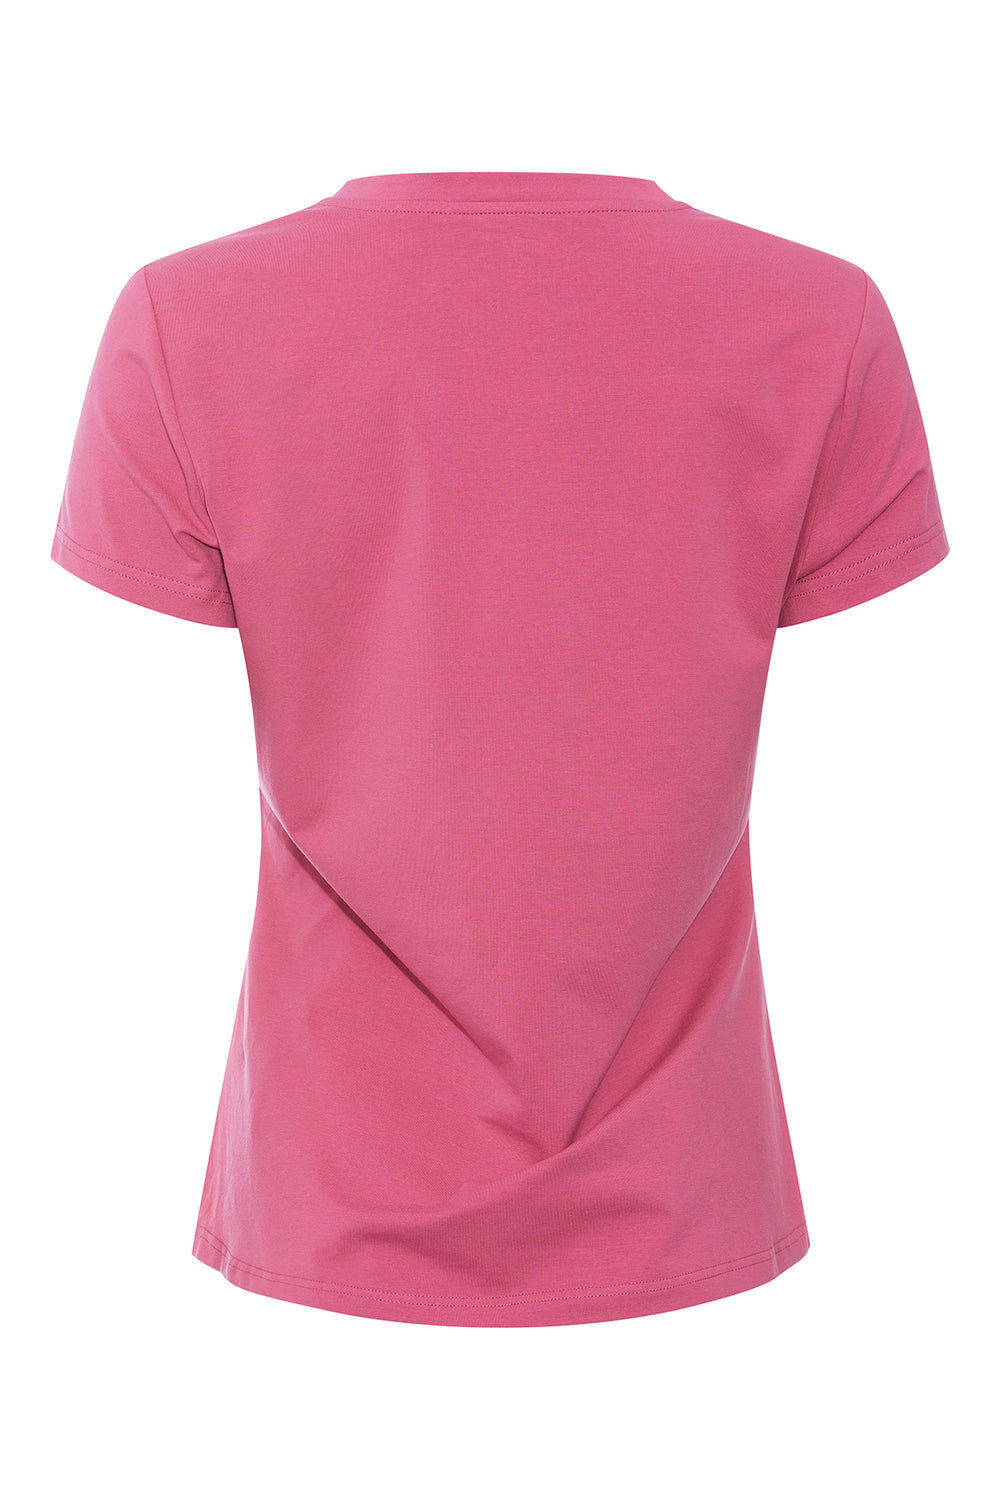 PBO Domos T-shirt T-SHIRTS 853 Dry rose